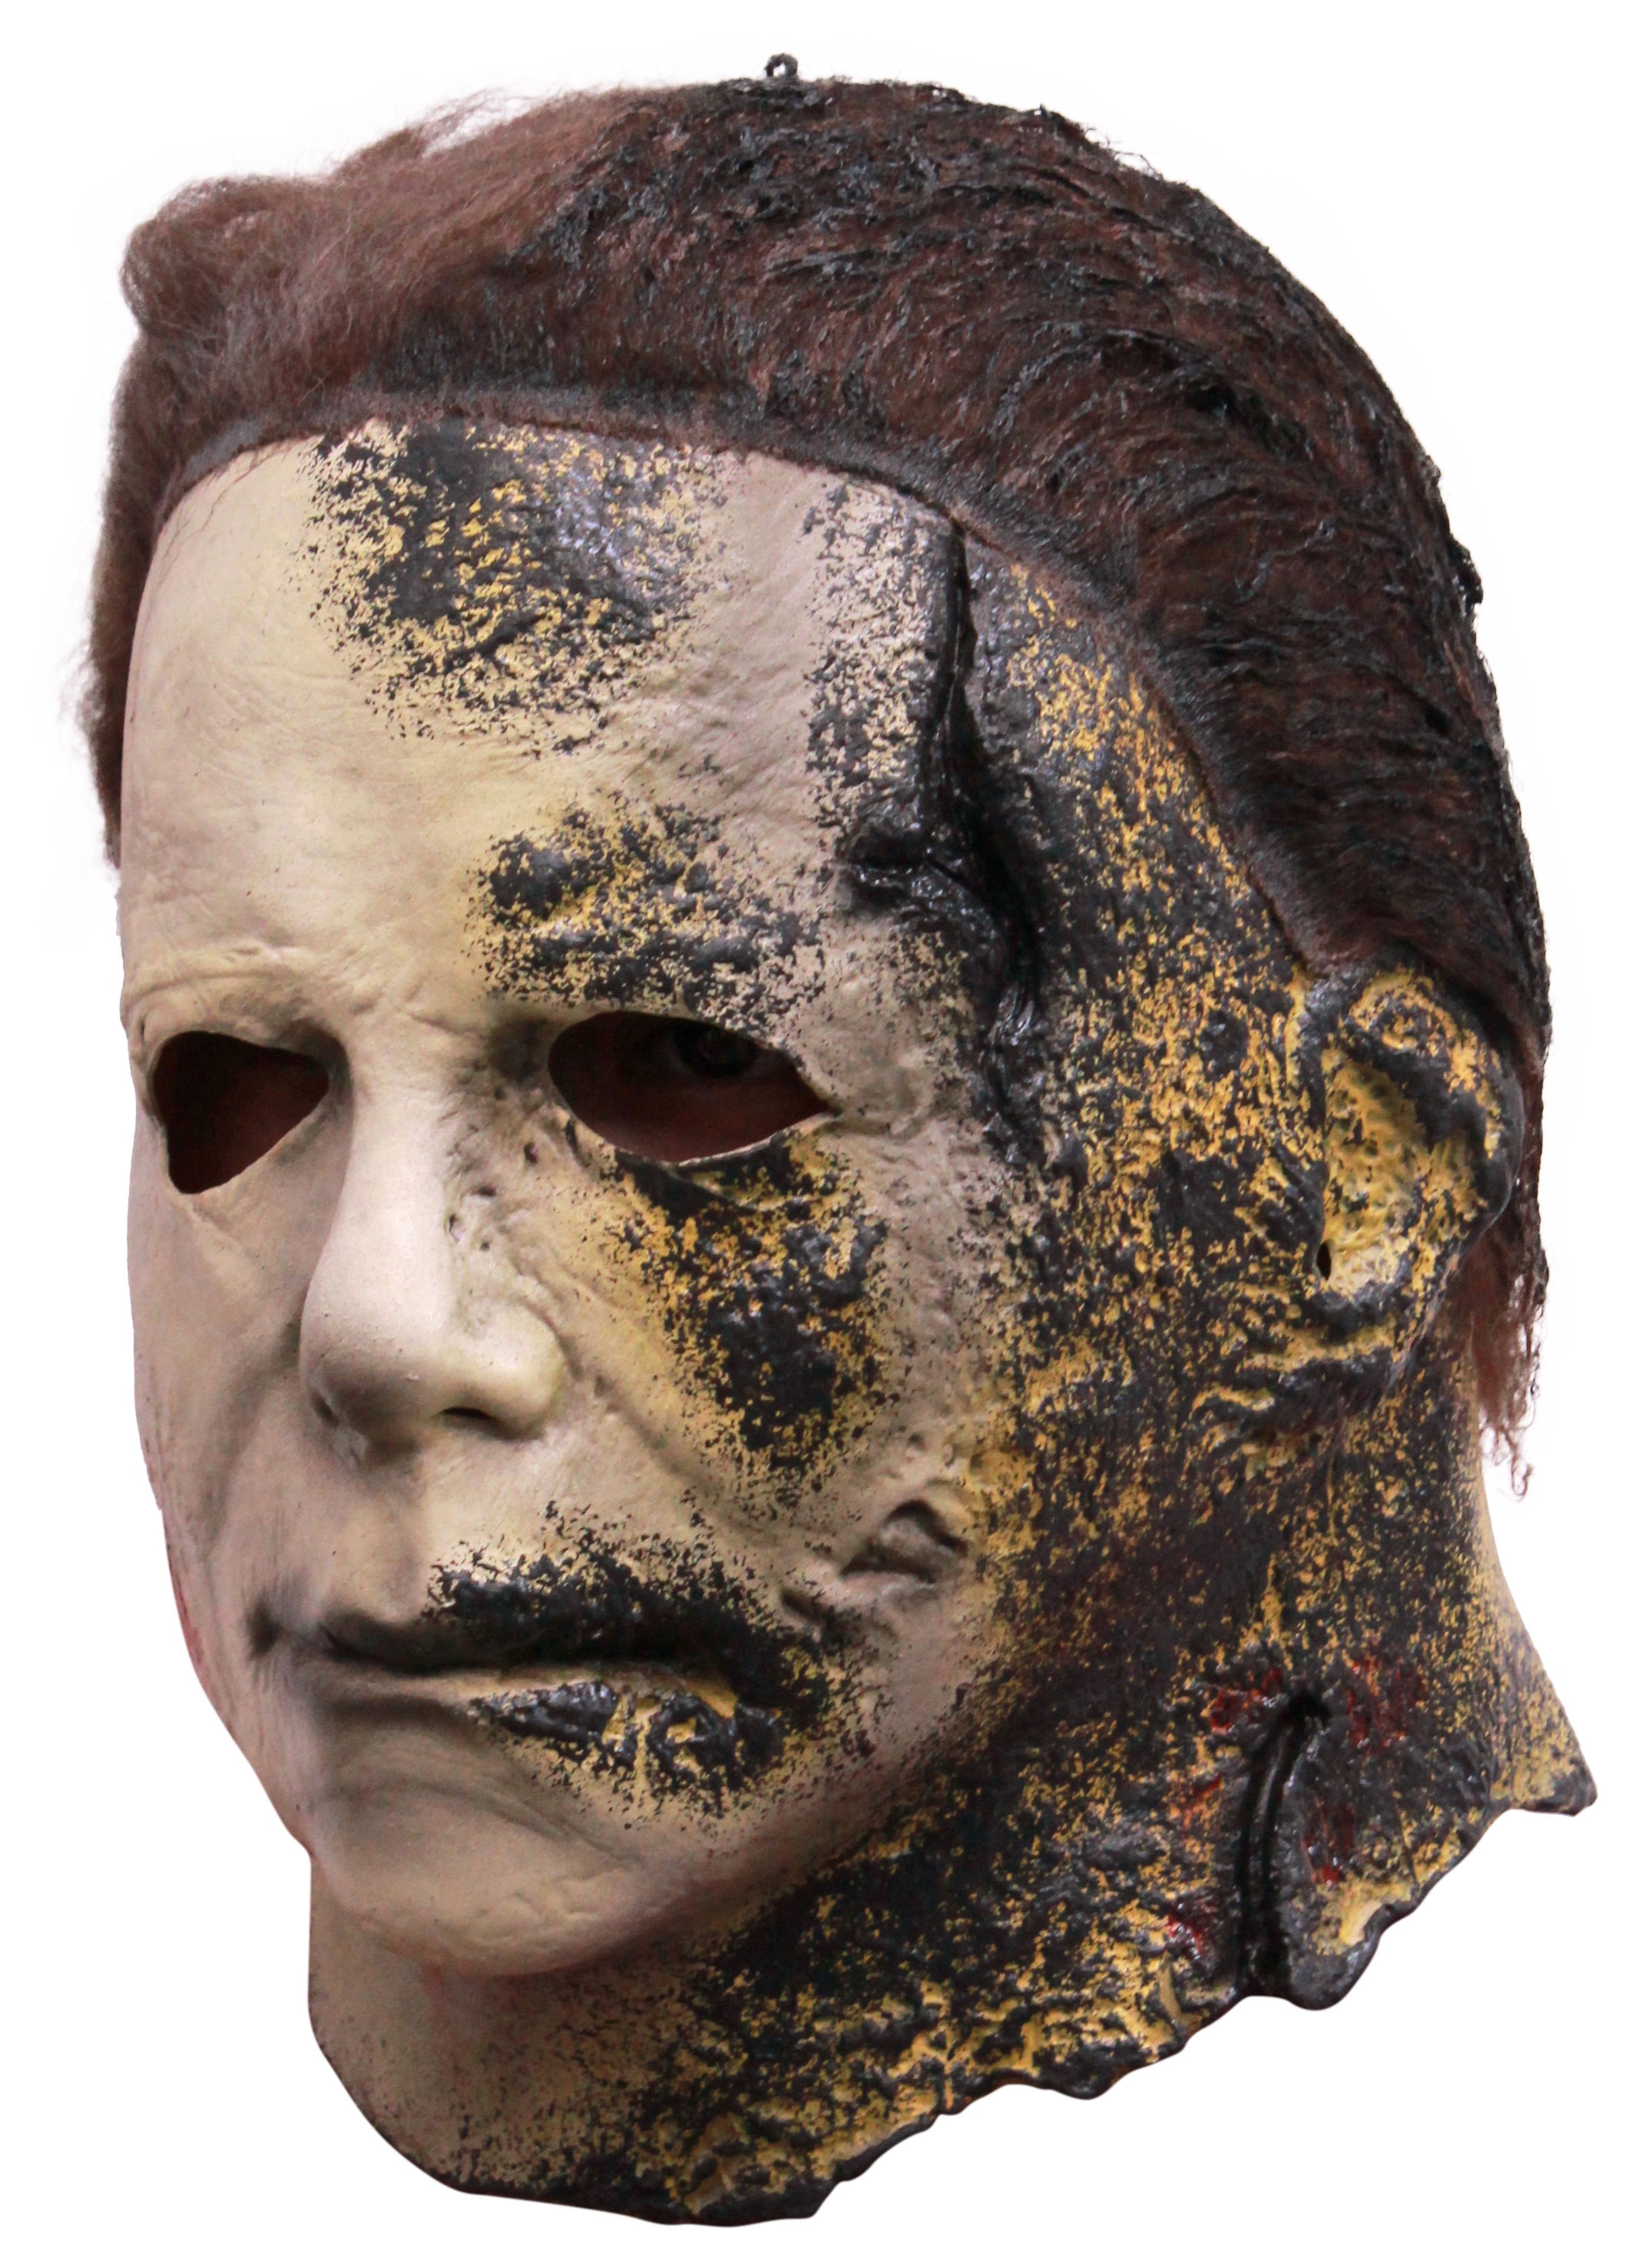 Decoración Zombie Decapitado Halloween: Halloween Kills Michael Myers -  Ghoulish Productions MX